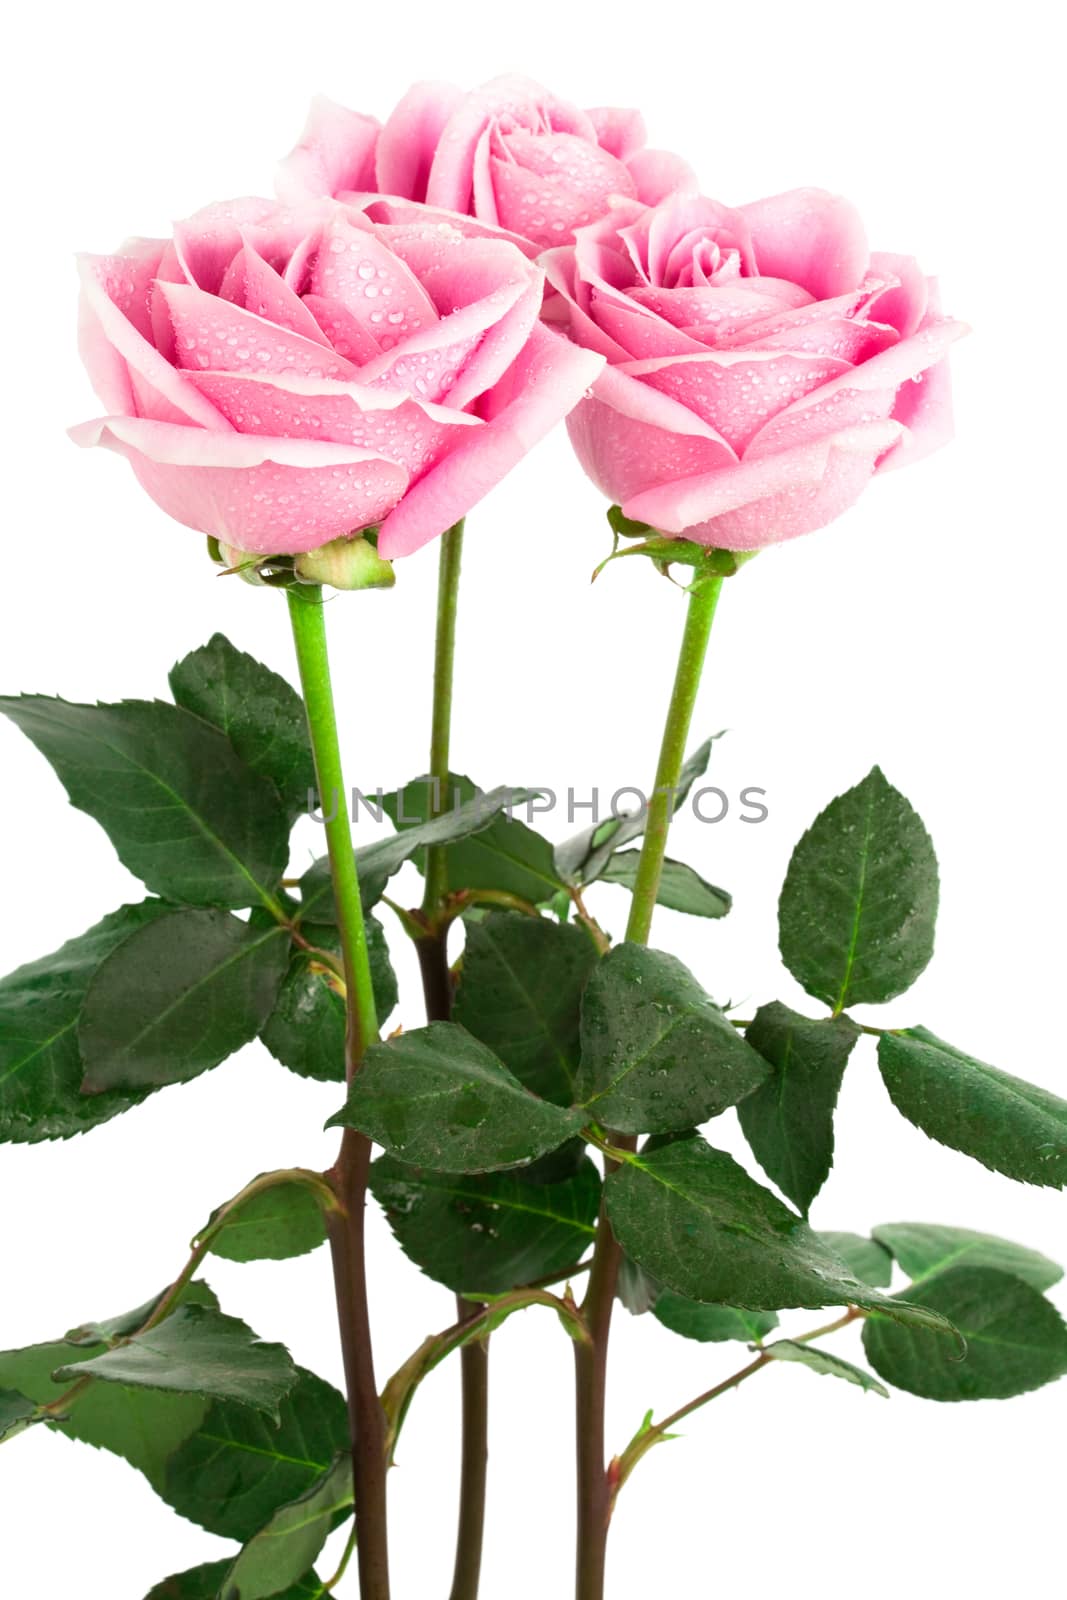 beautiful roses by terex